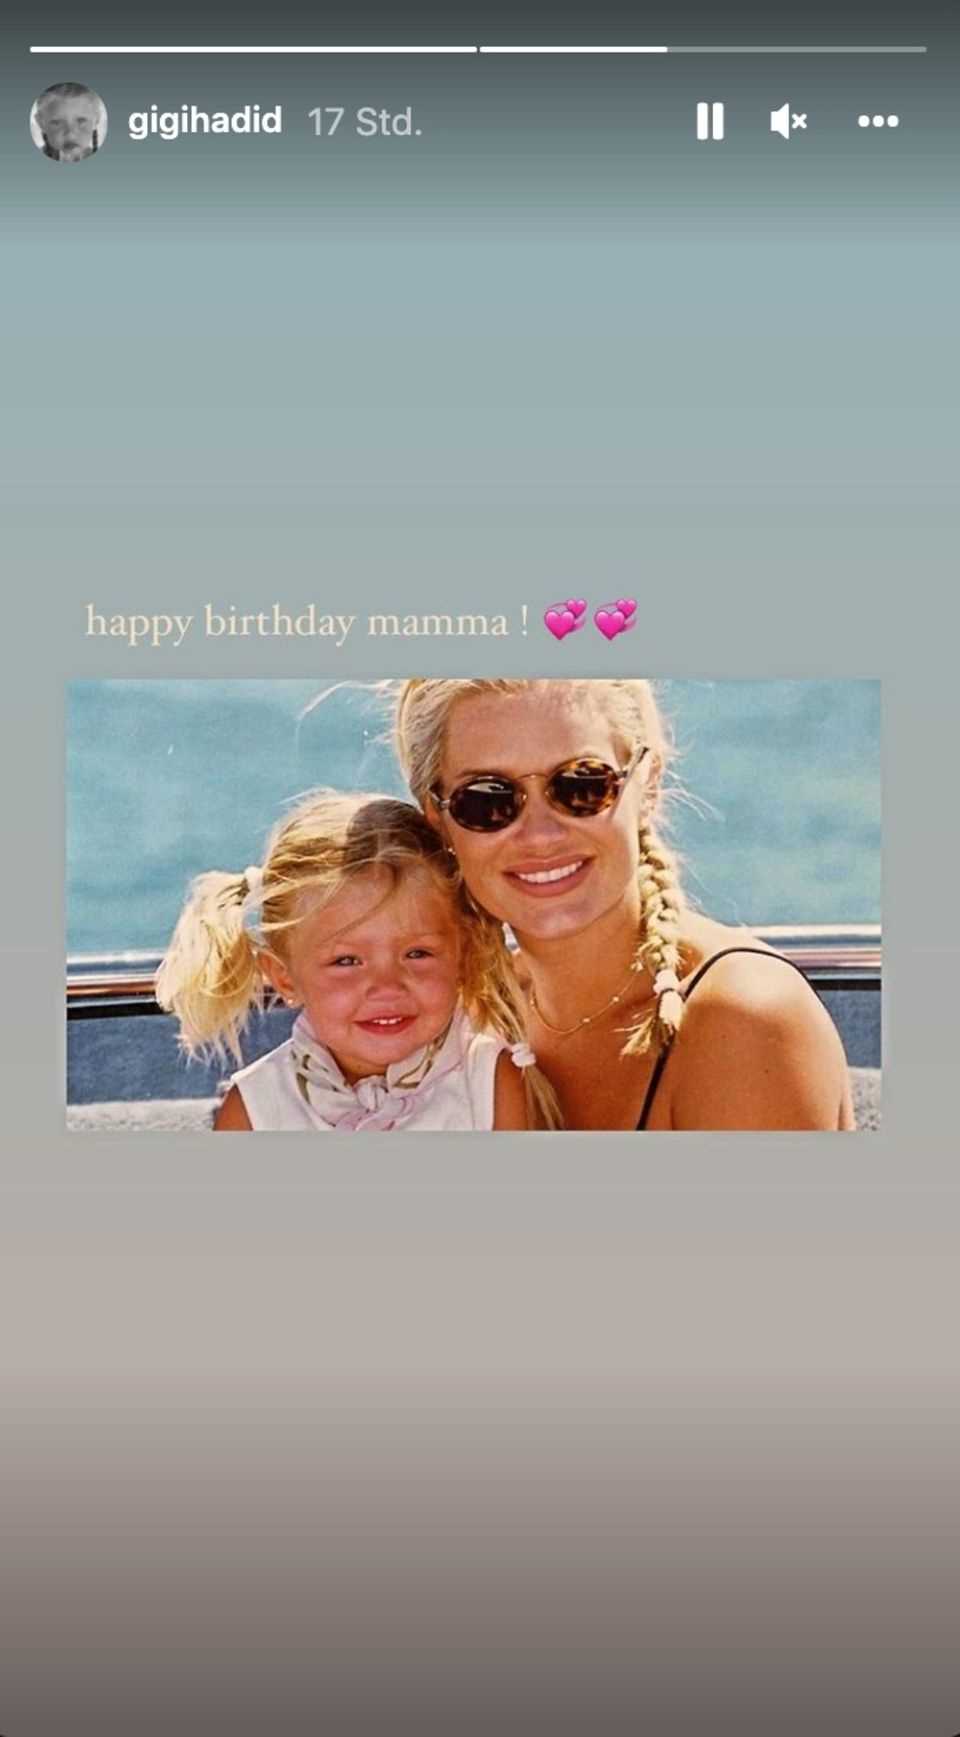 Gigi Hadid congratulates her mother Yolanda on her birthday